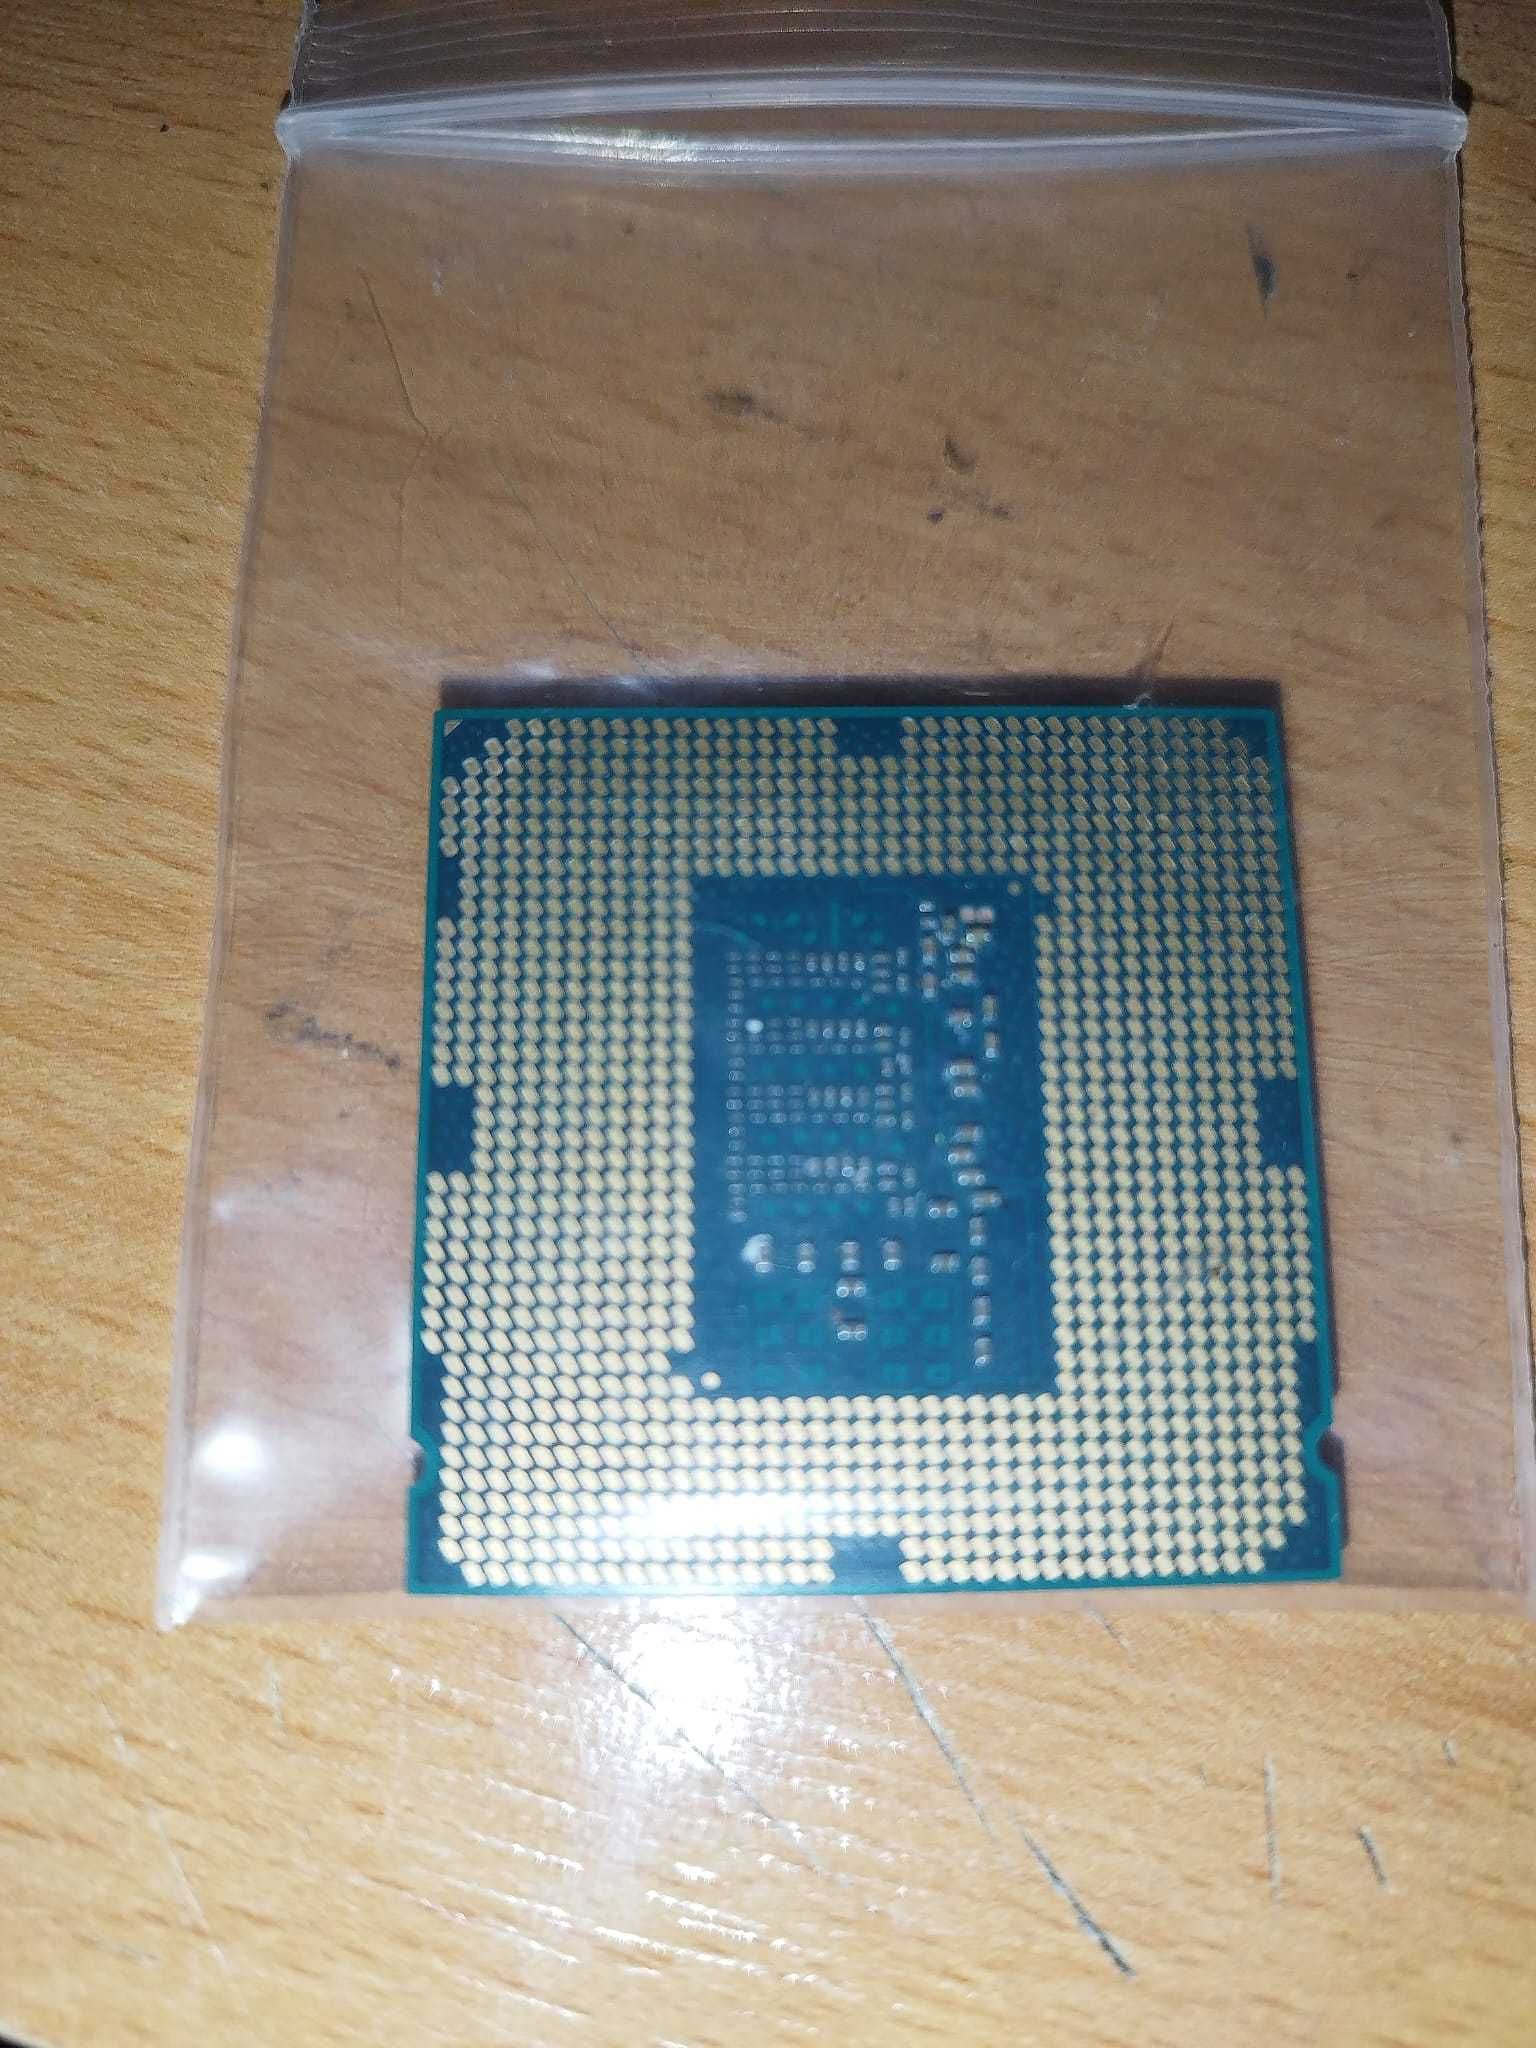 Intel Core i5-4690K - 3.90 GHz 6M Cache